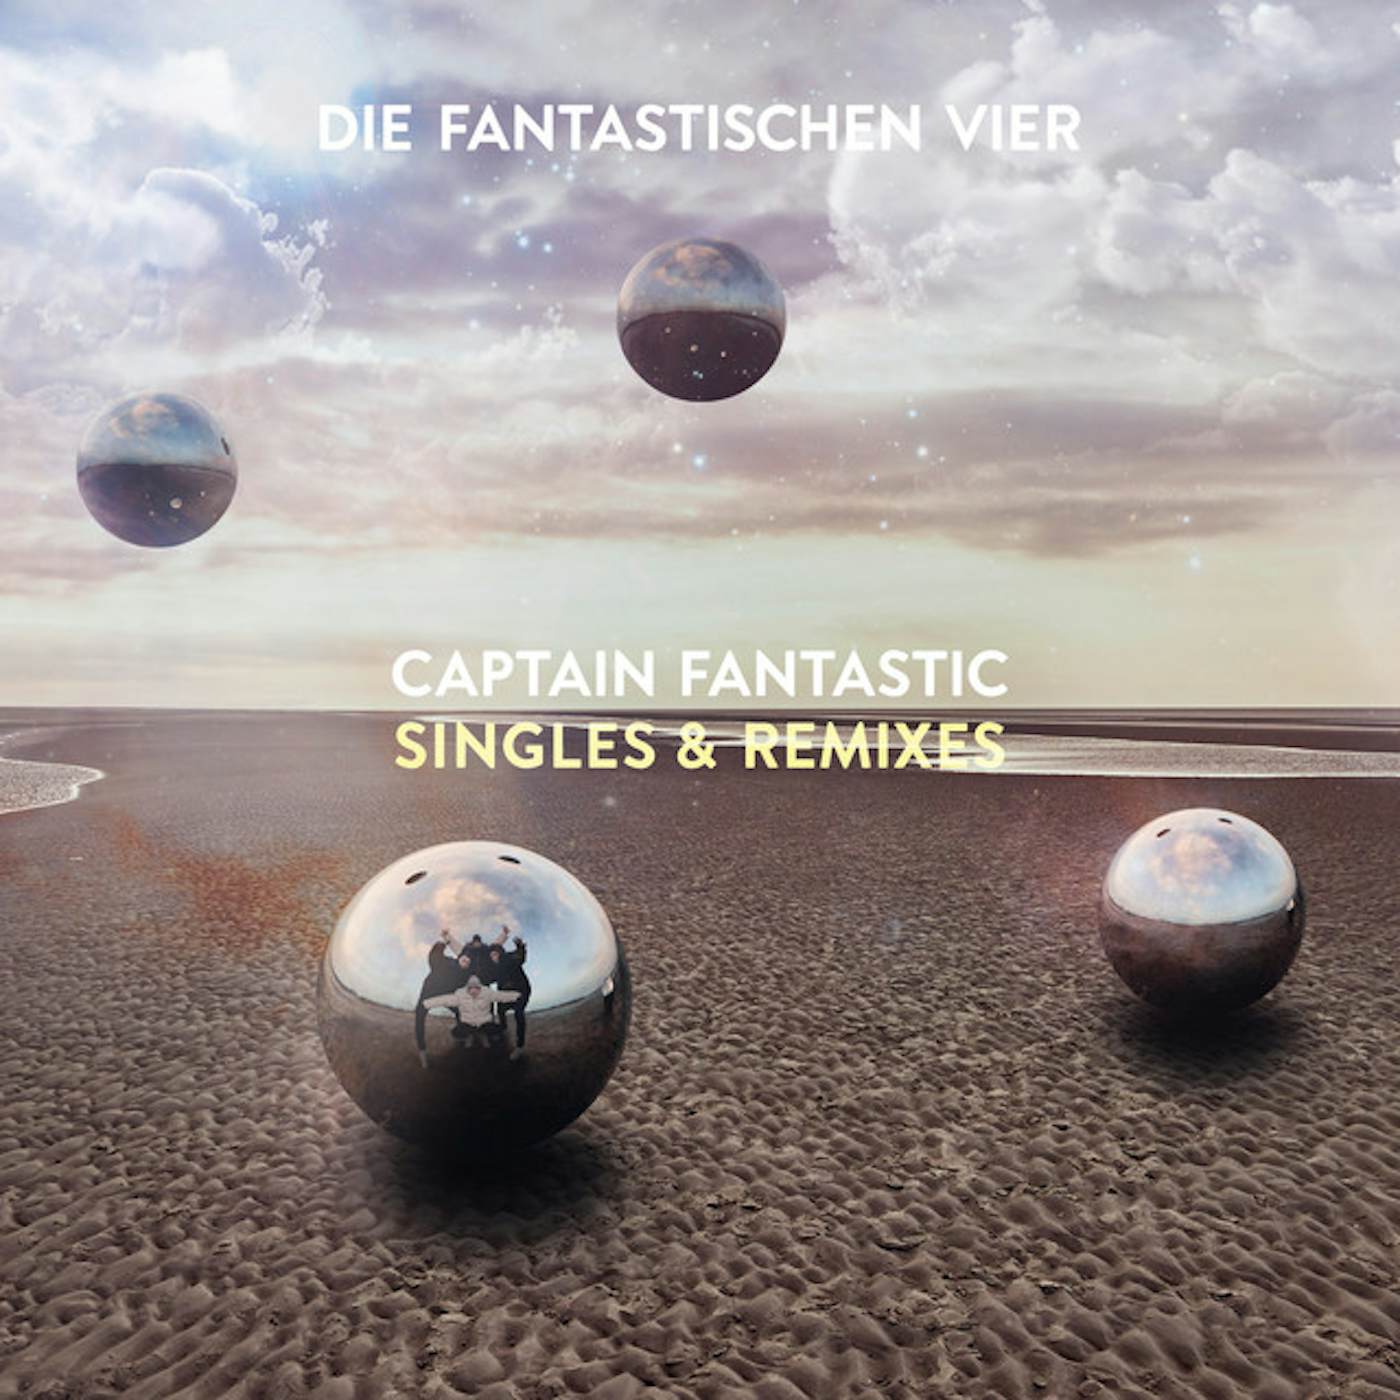 Fantastischen Vier Captain Fantastic Singles & Remixes Vinyl Record